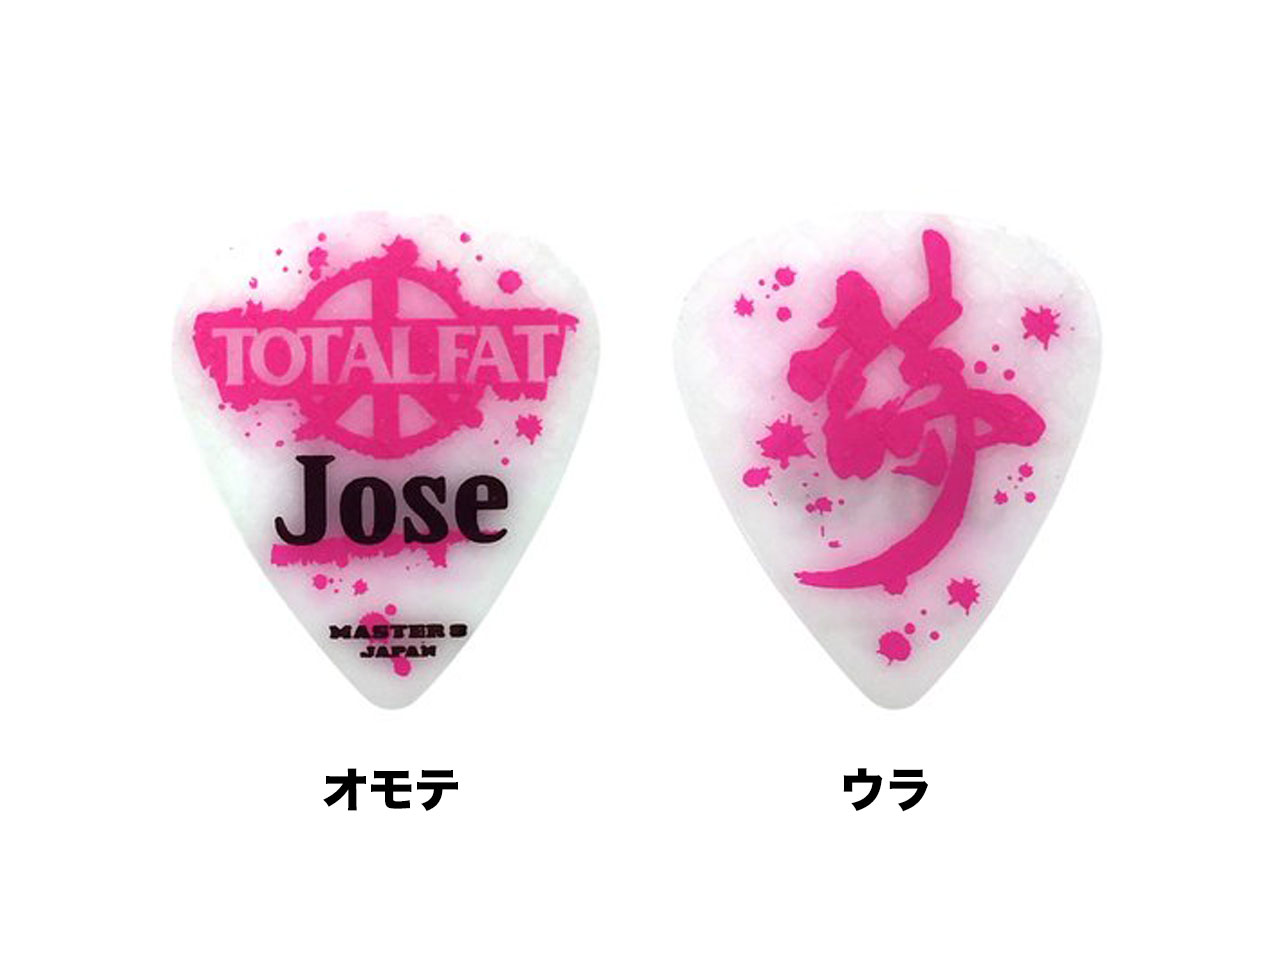 MASTER 8 JAPAN(マスターエイトジャパン) TOTALFAT / Jose SIGNATURE model 10枚セット